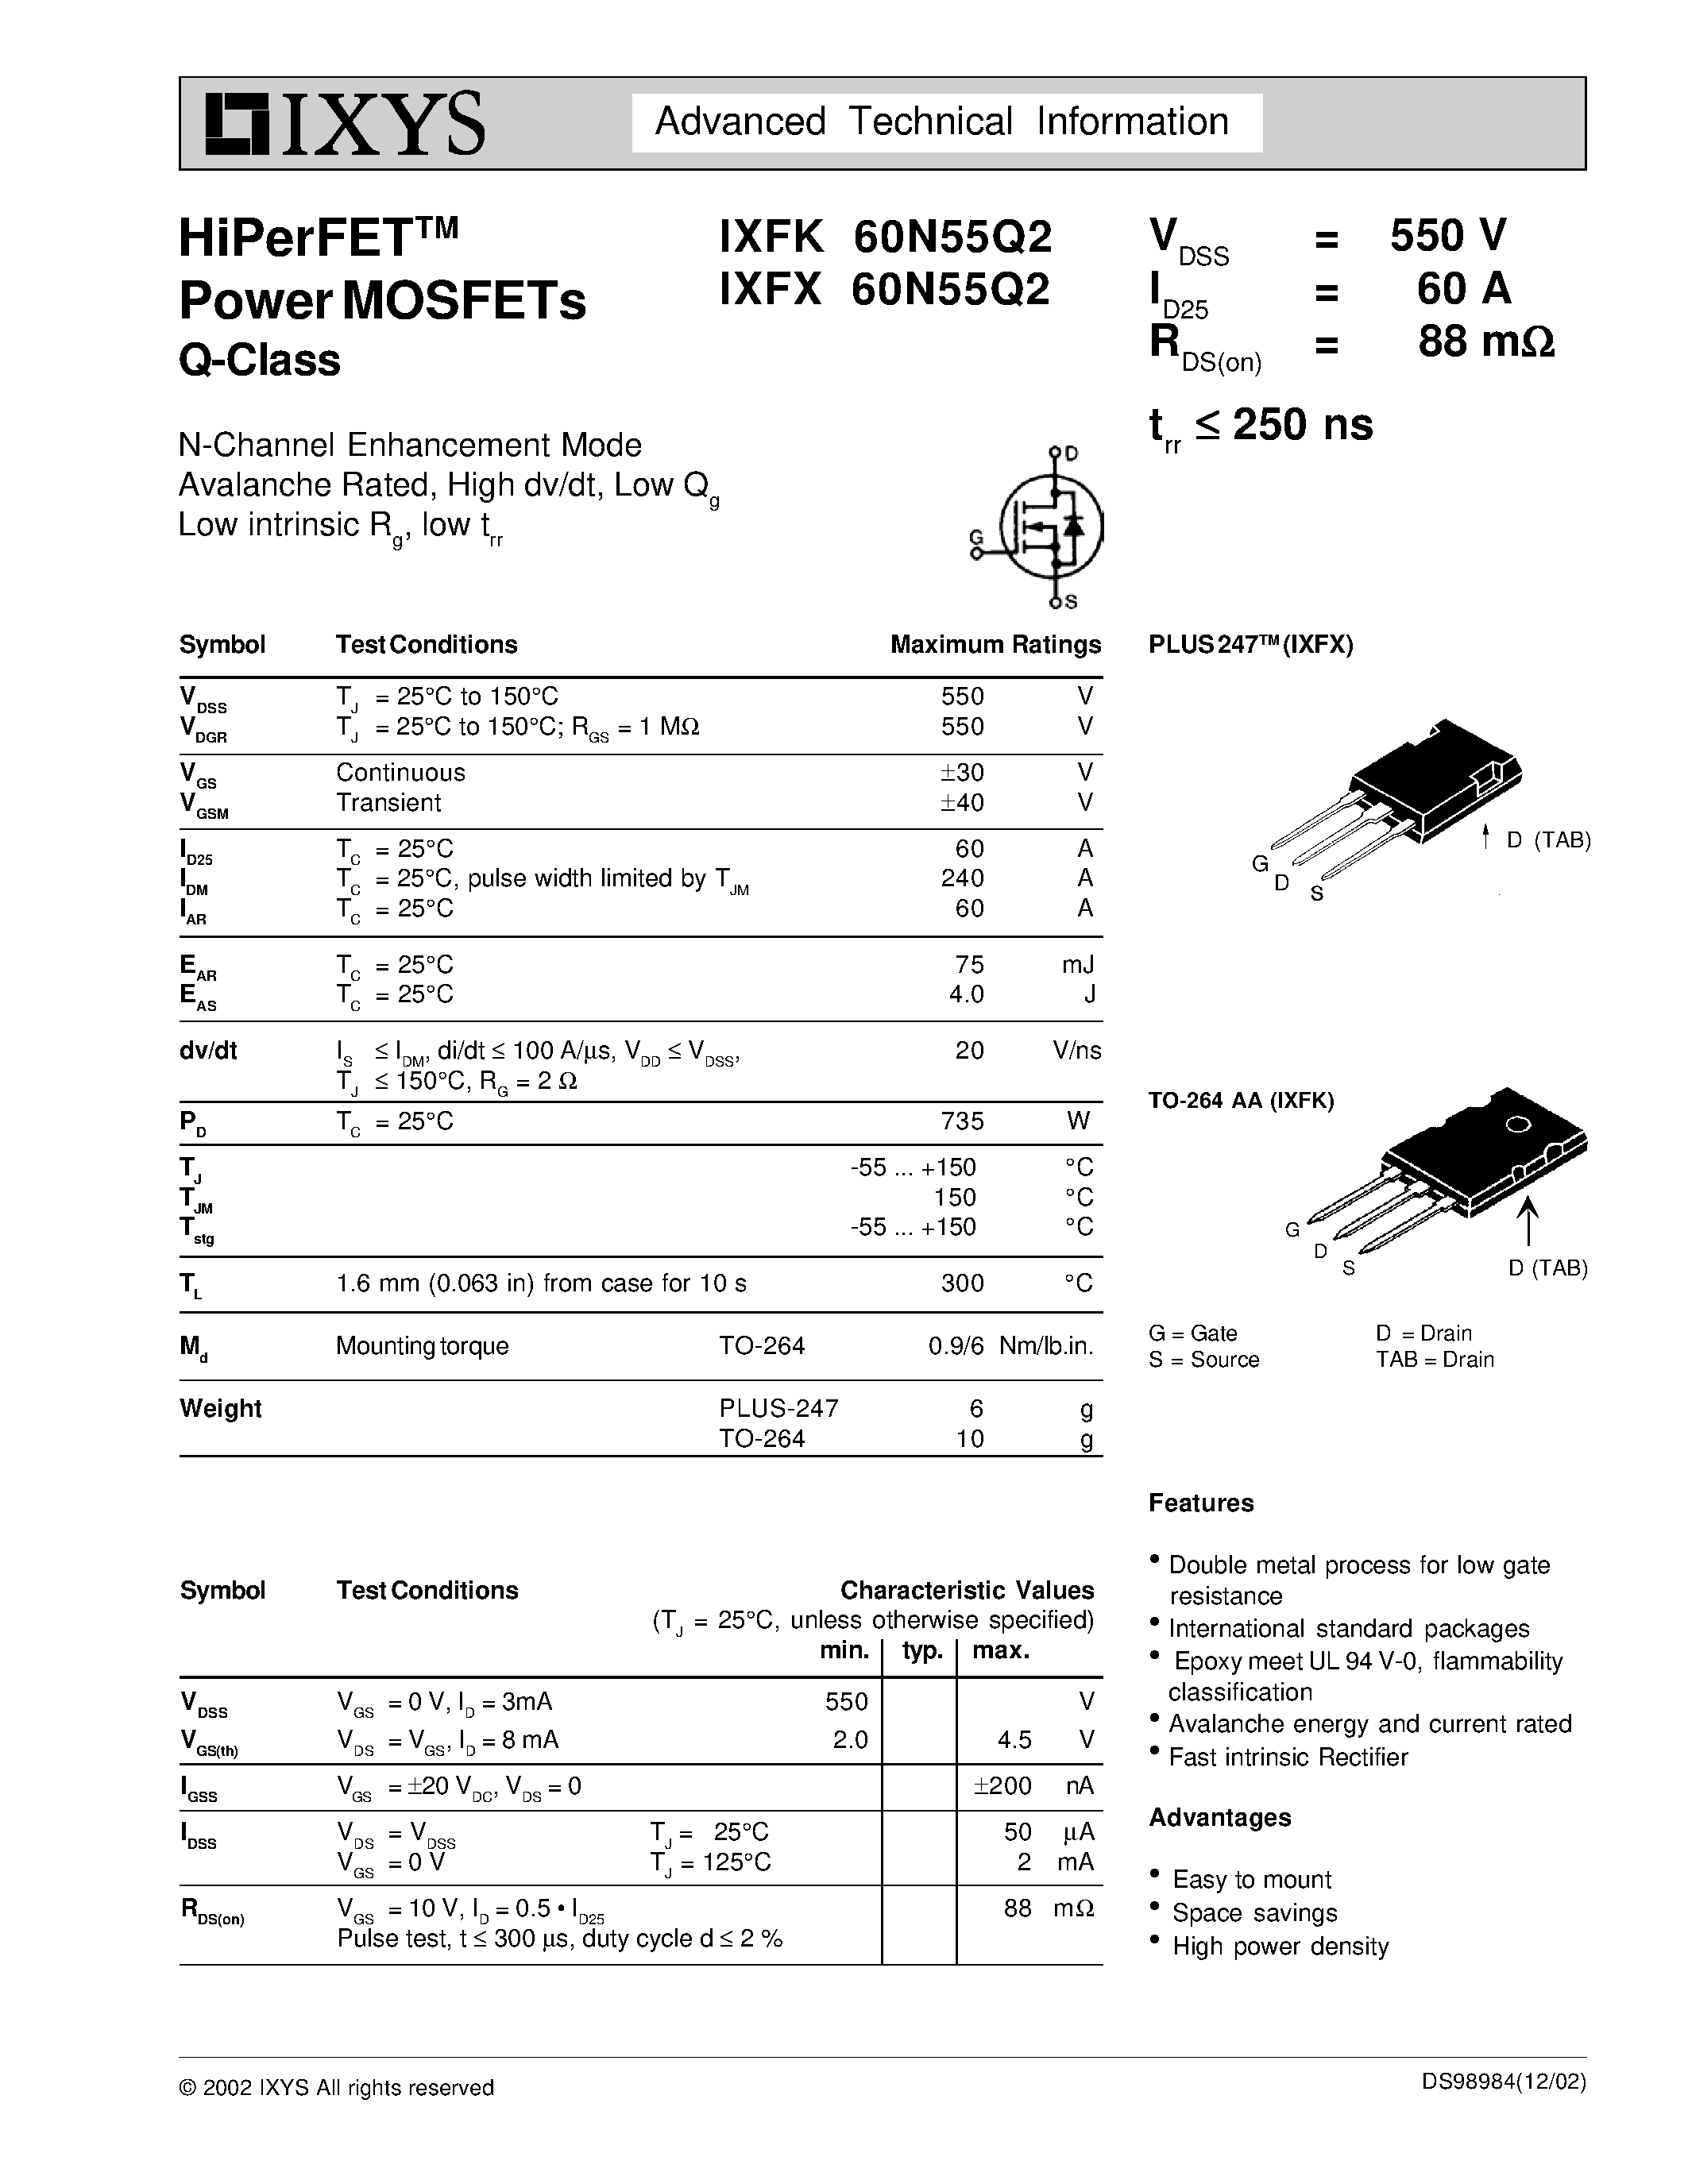 Datasheet IXFK60N55Q2 - HiPerFET Power MOSFETs Q-Class page 1